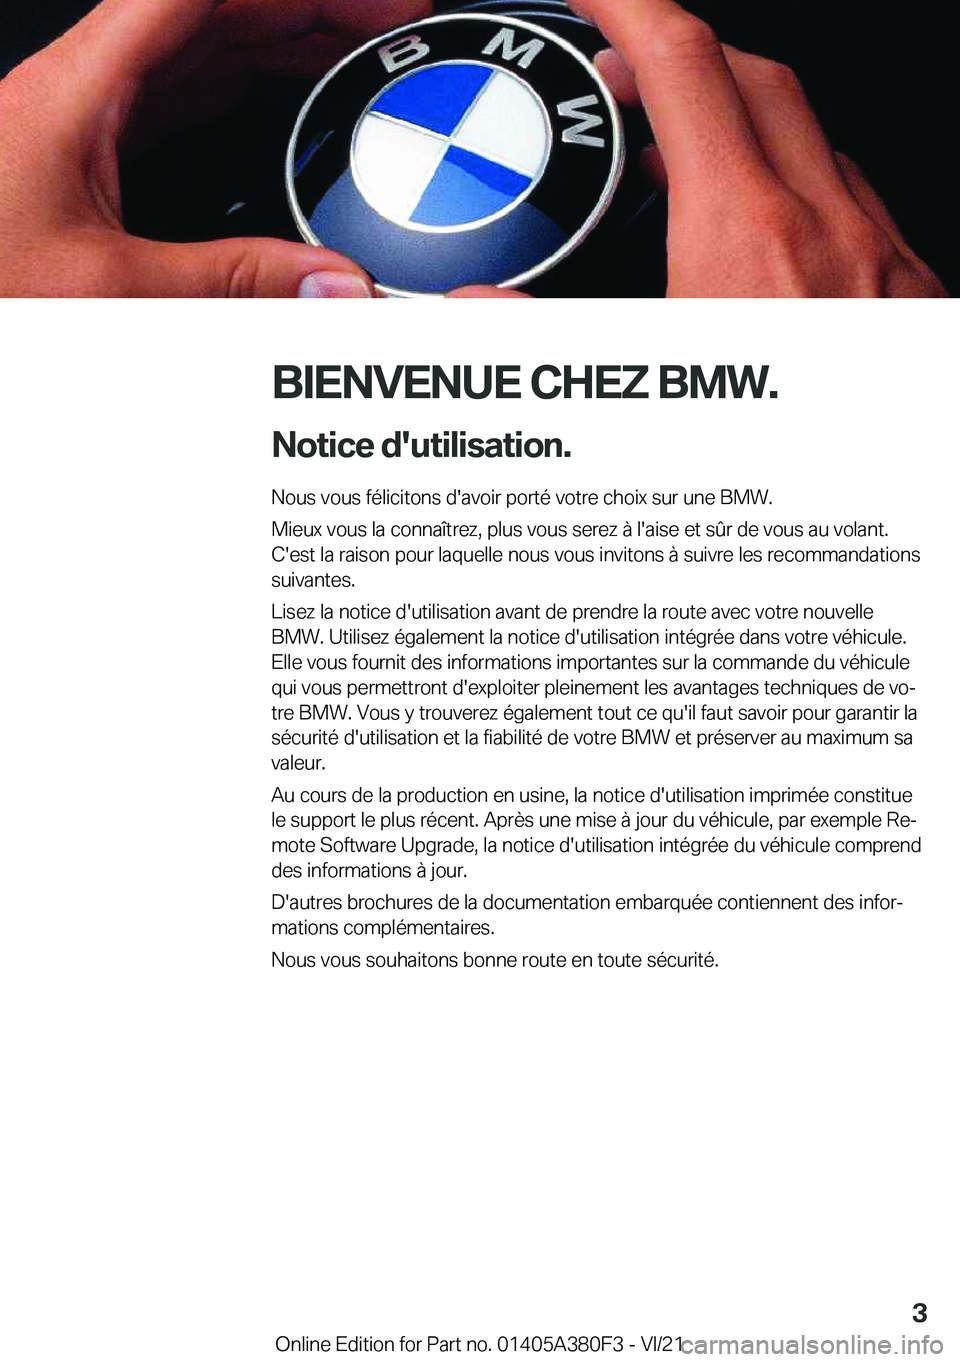 BMW 5 SERIES 2022  Notices Demploi (in French) �B�I�E�N�V�E�N�U�E��C�H�E�Z��B�M�W�.�N�o�t�i�c�e��d�'�u�t�i�l�i�s�a�t�i�o�n�.
�N�o�u�s��v�o�u�s��f�é�l�i�c�i�t�o�n�s��d�'�a�v�o�i�r��p�o�r�t�é��v�o�t�r�e��c�h�o�i�x��s�u�r��u�n�e�